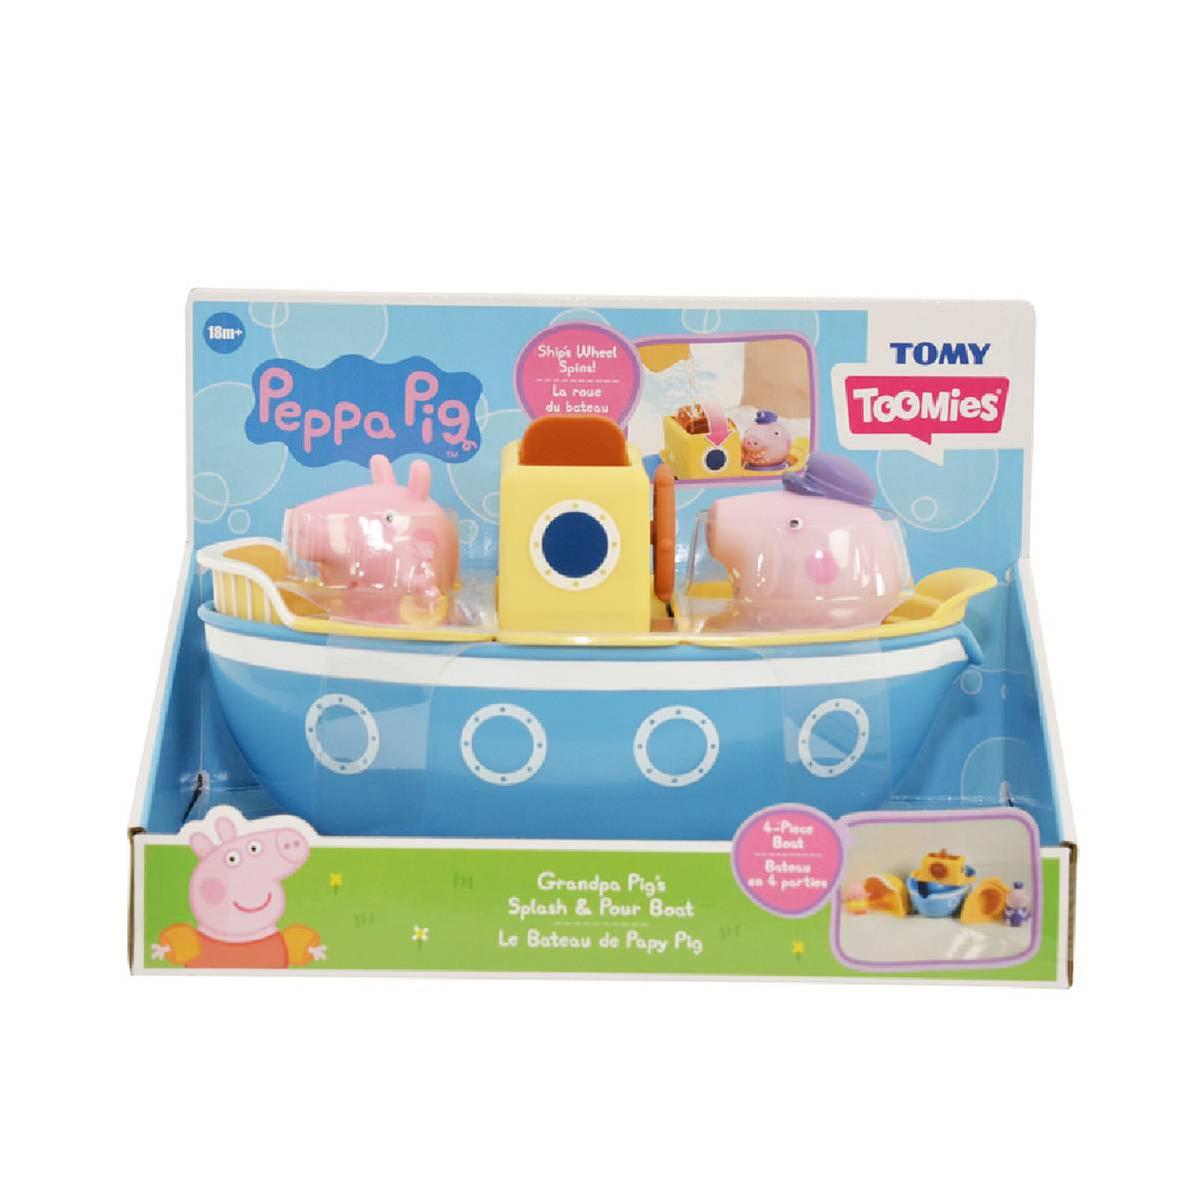 Asimilar Individualidad Cíclope Peppa Pig - Barco de baño del abuelo Pig | Peppa Pig. Cat 54 | Toys"R"Us  España